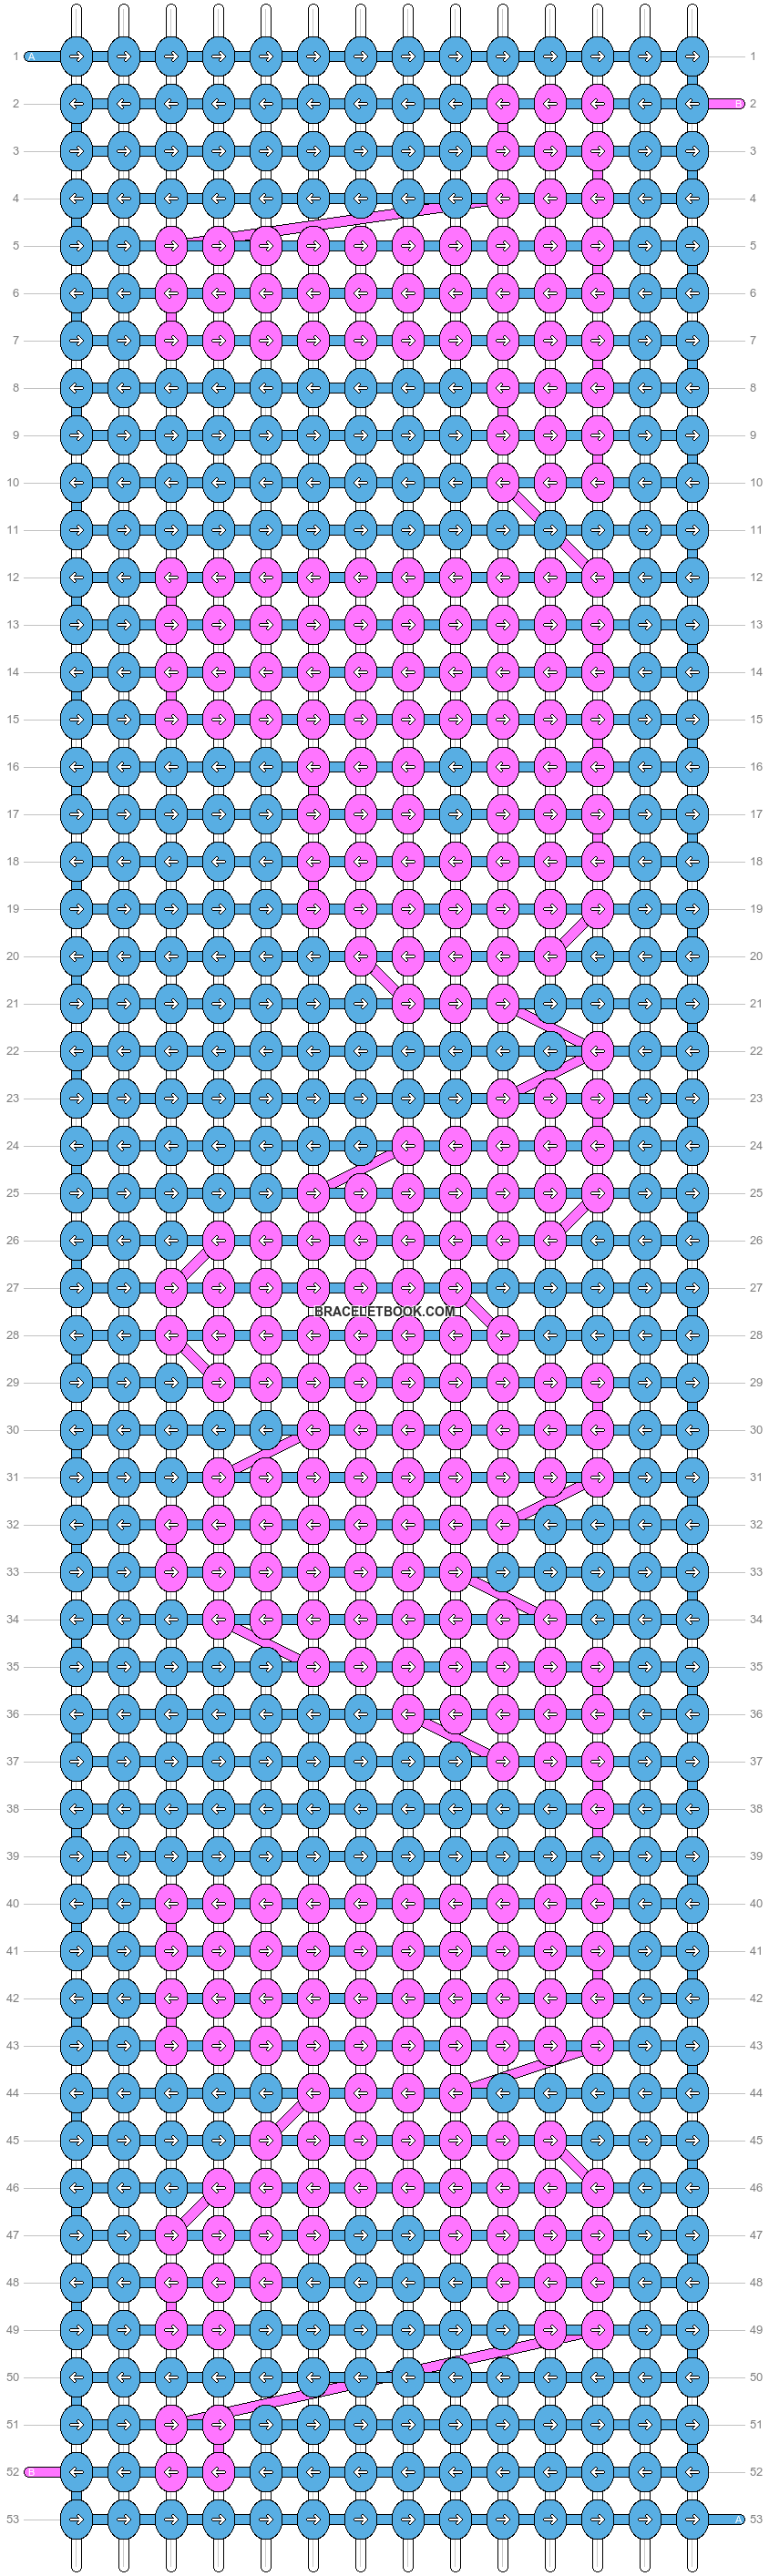 Alpha pattern #38816 variation #105004 pattern